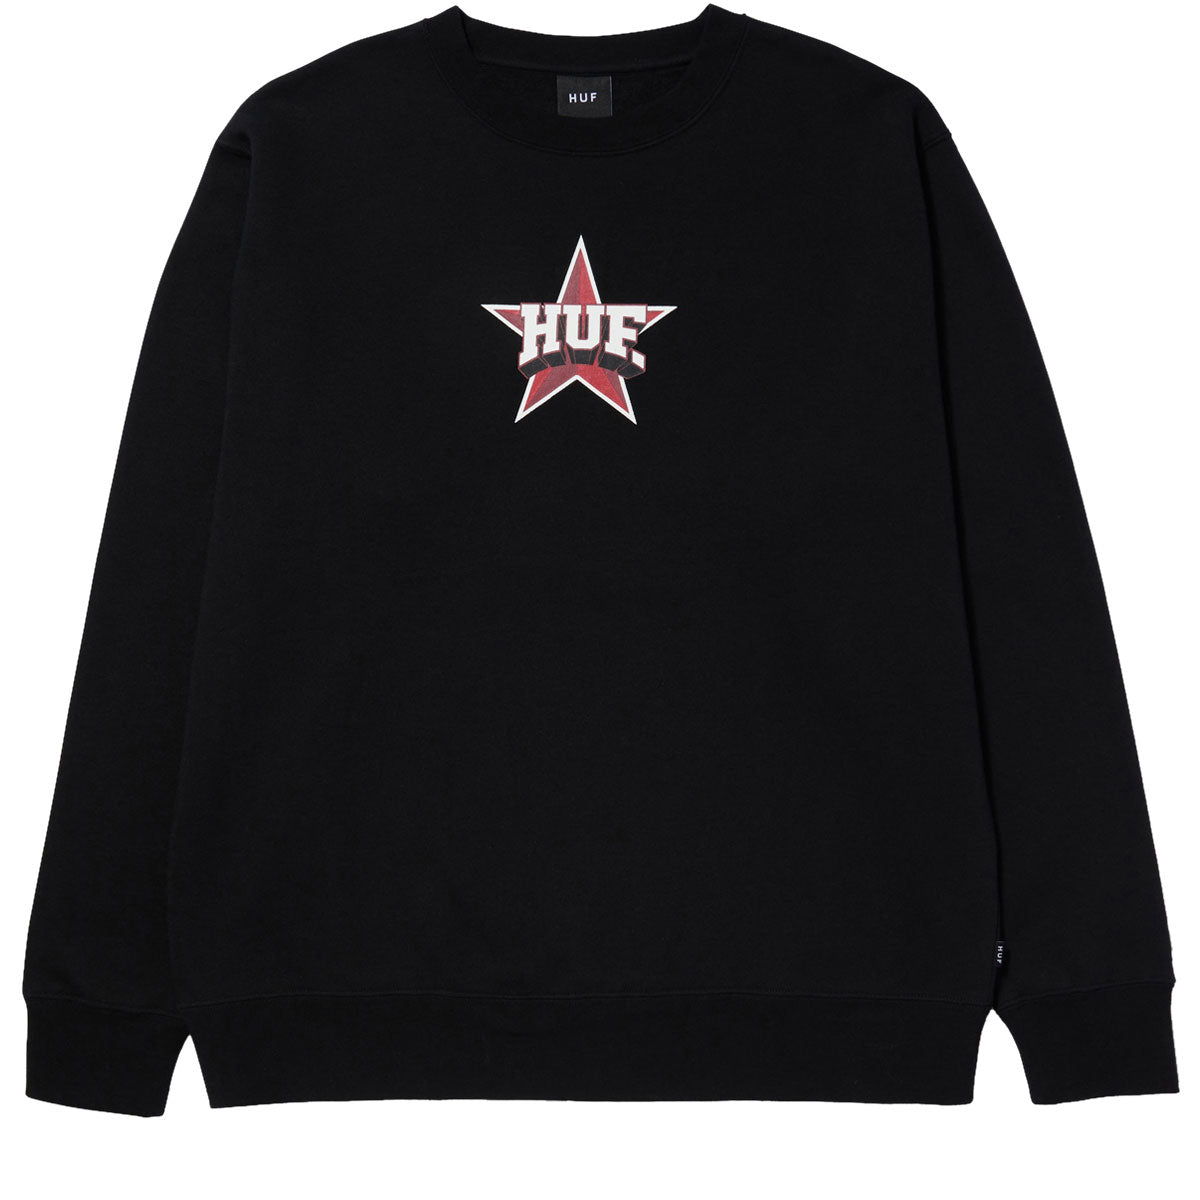 HUF All Star Crewneck Sweatshirt - Black image 1